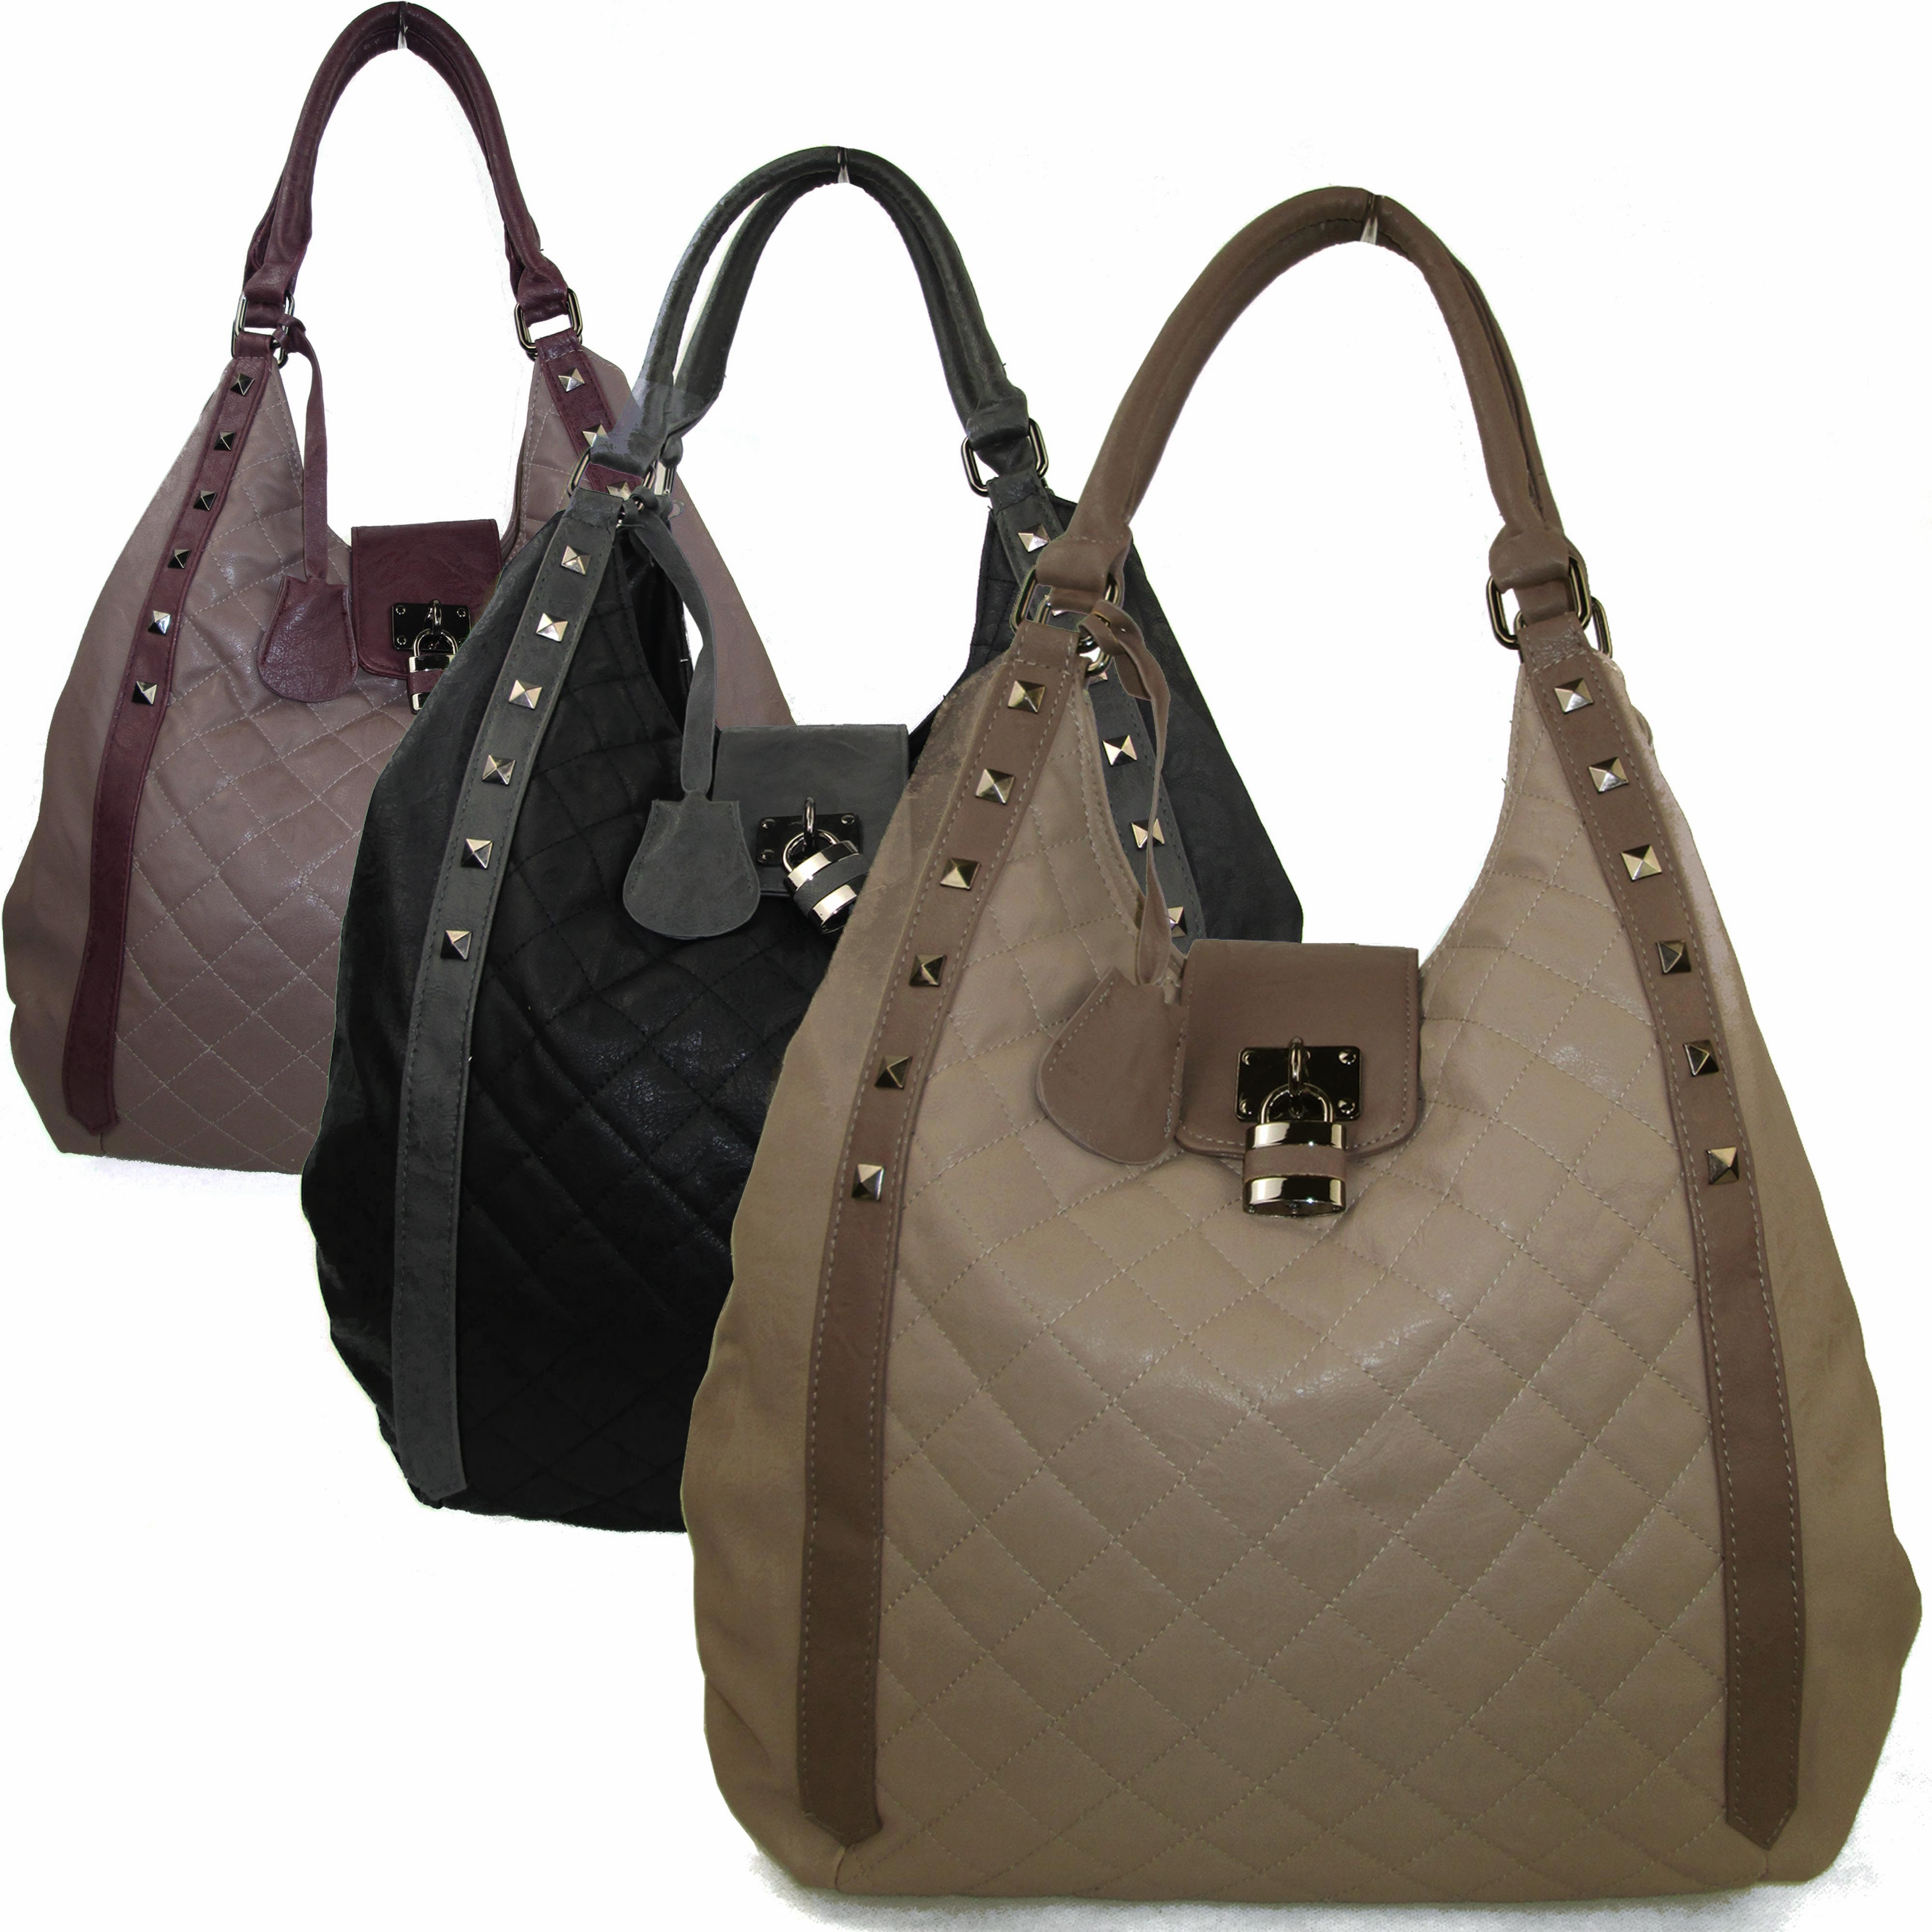 Details about Large Ladies Shoulder Bag Faux Leather Quilted Designer ...